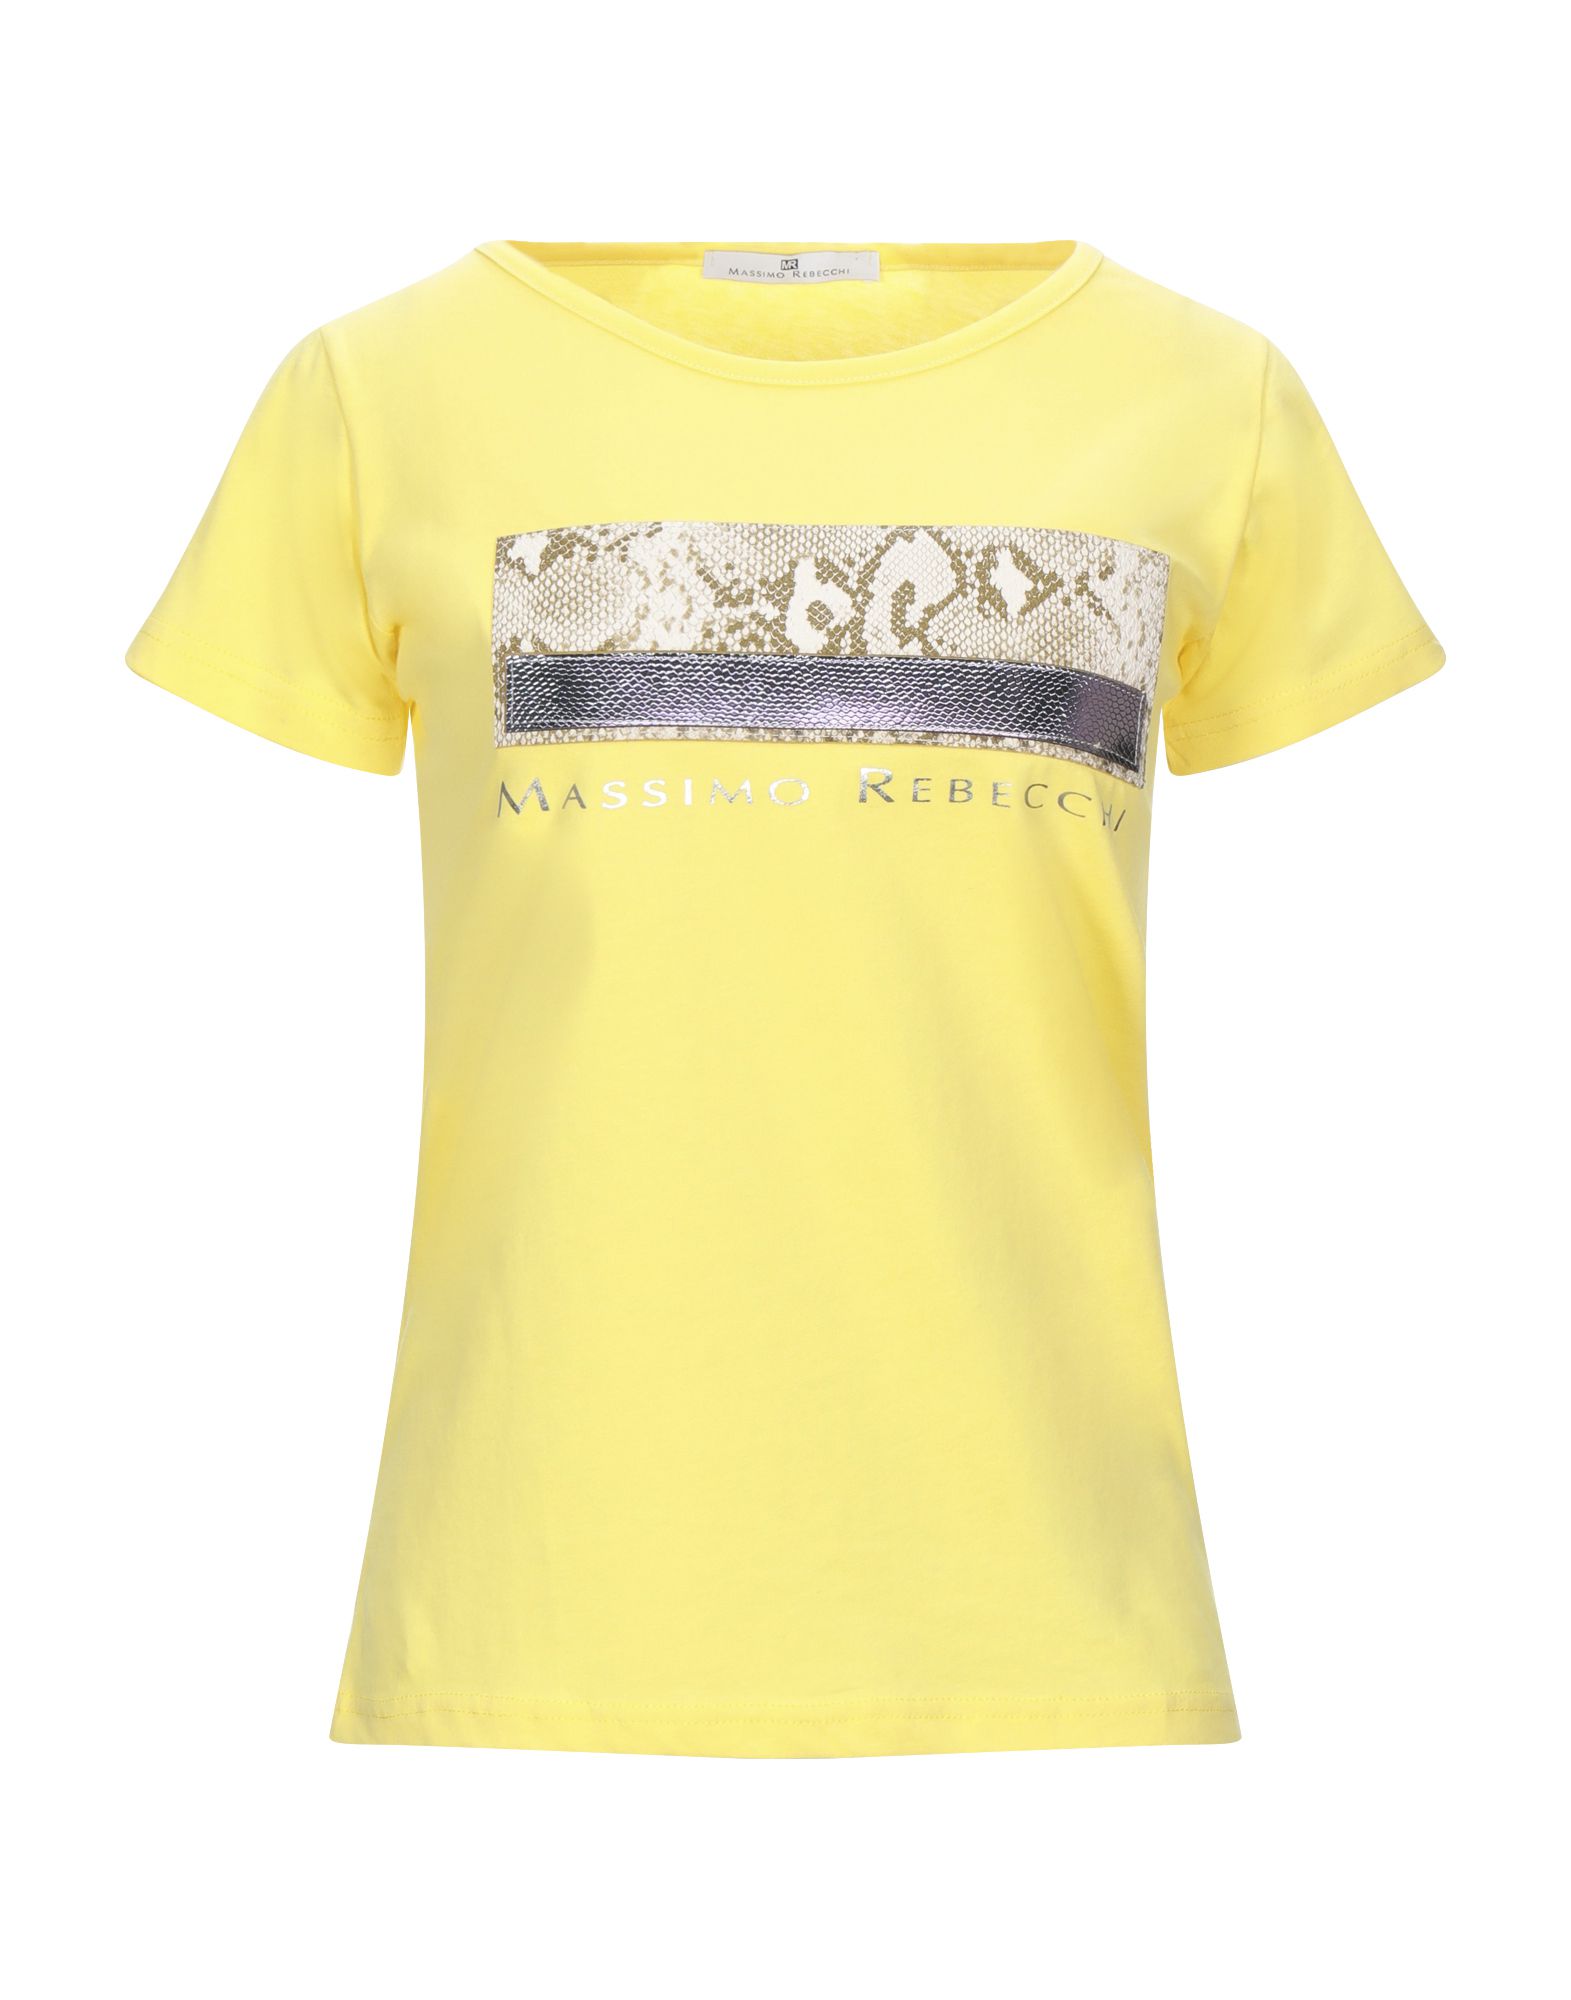 Mr Massimo Rebecchi T-shirts In Yellow